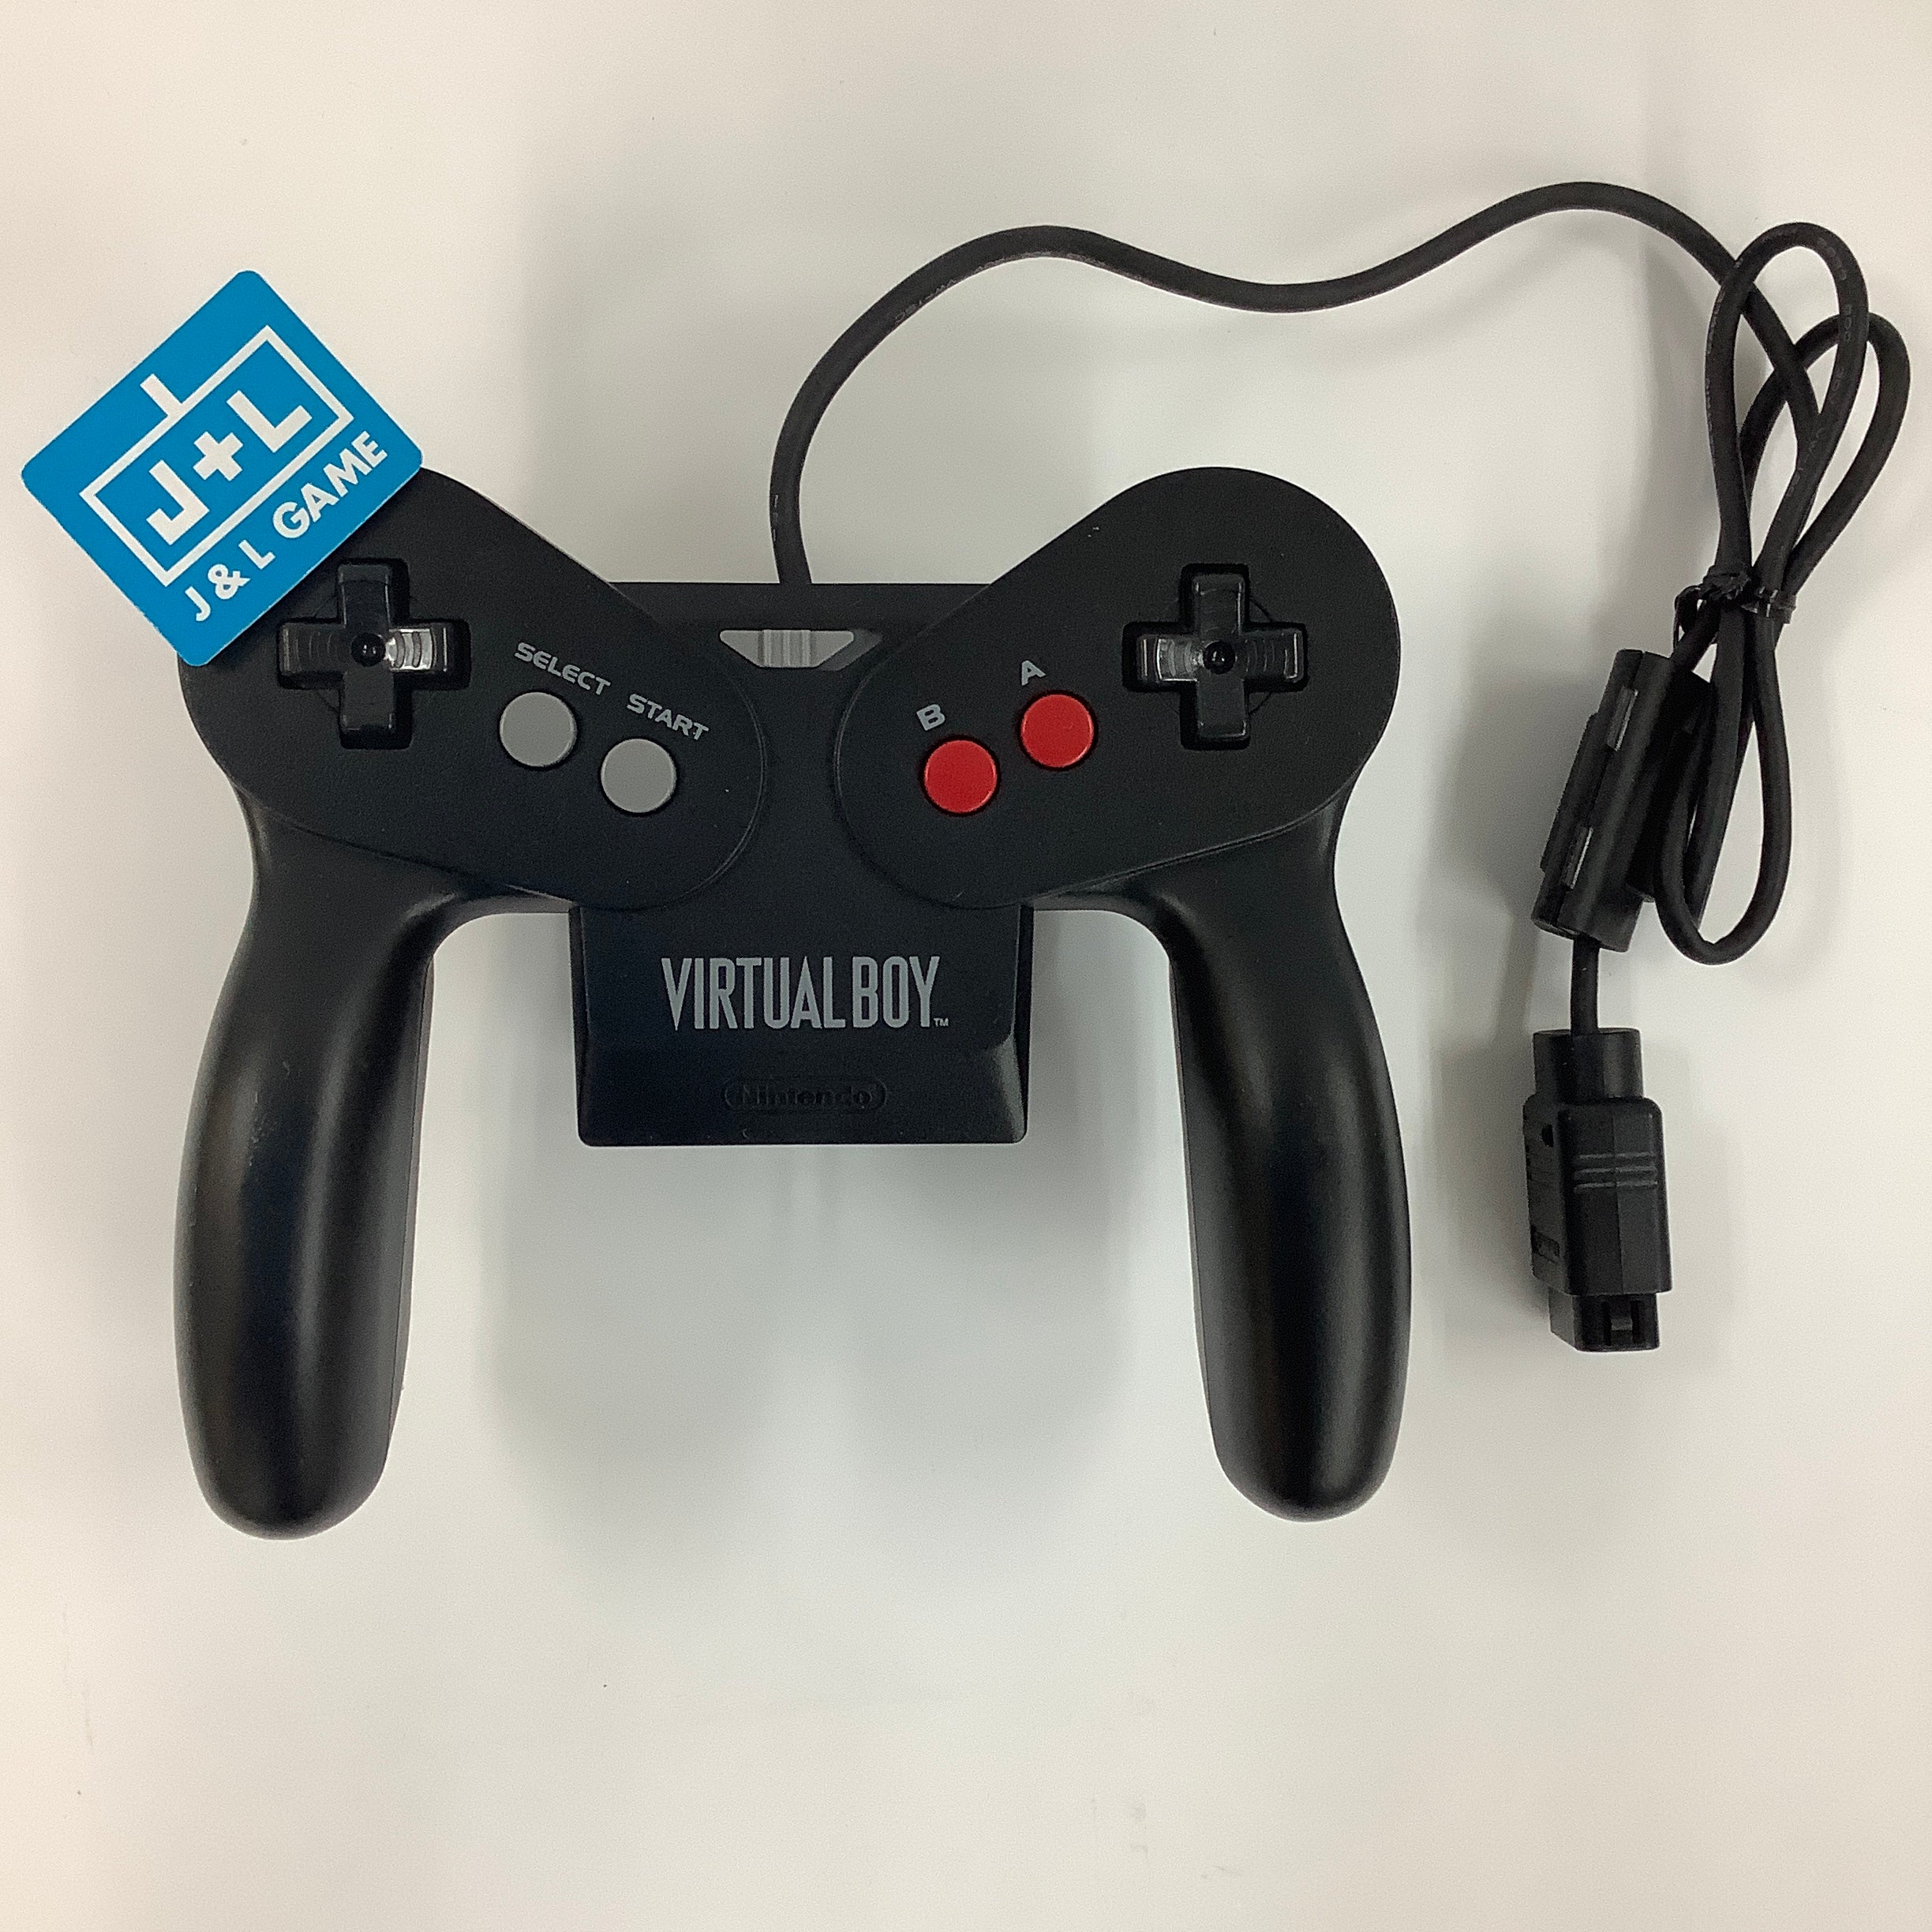 Virtual Boy Console - (VB) Virtual Boy [Pre-Owned] (Japanese Import) CONSOLE Nintendo   